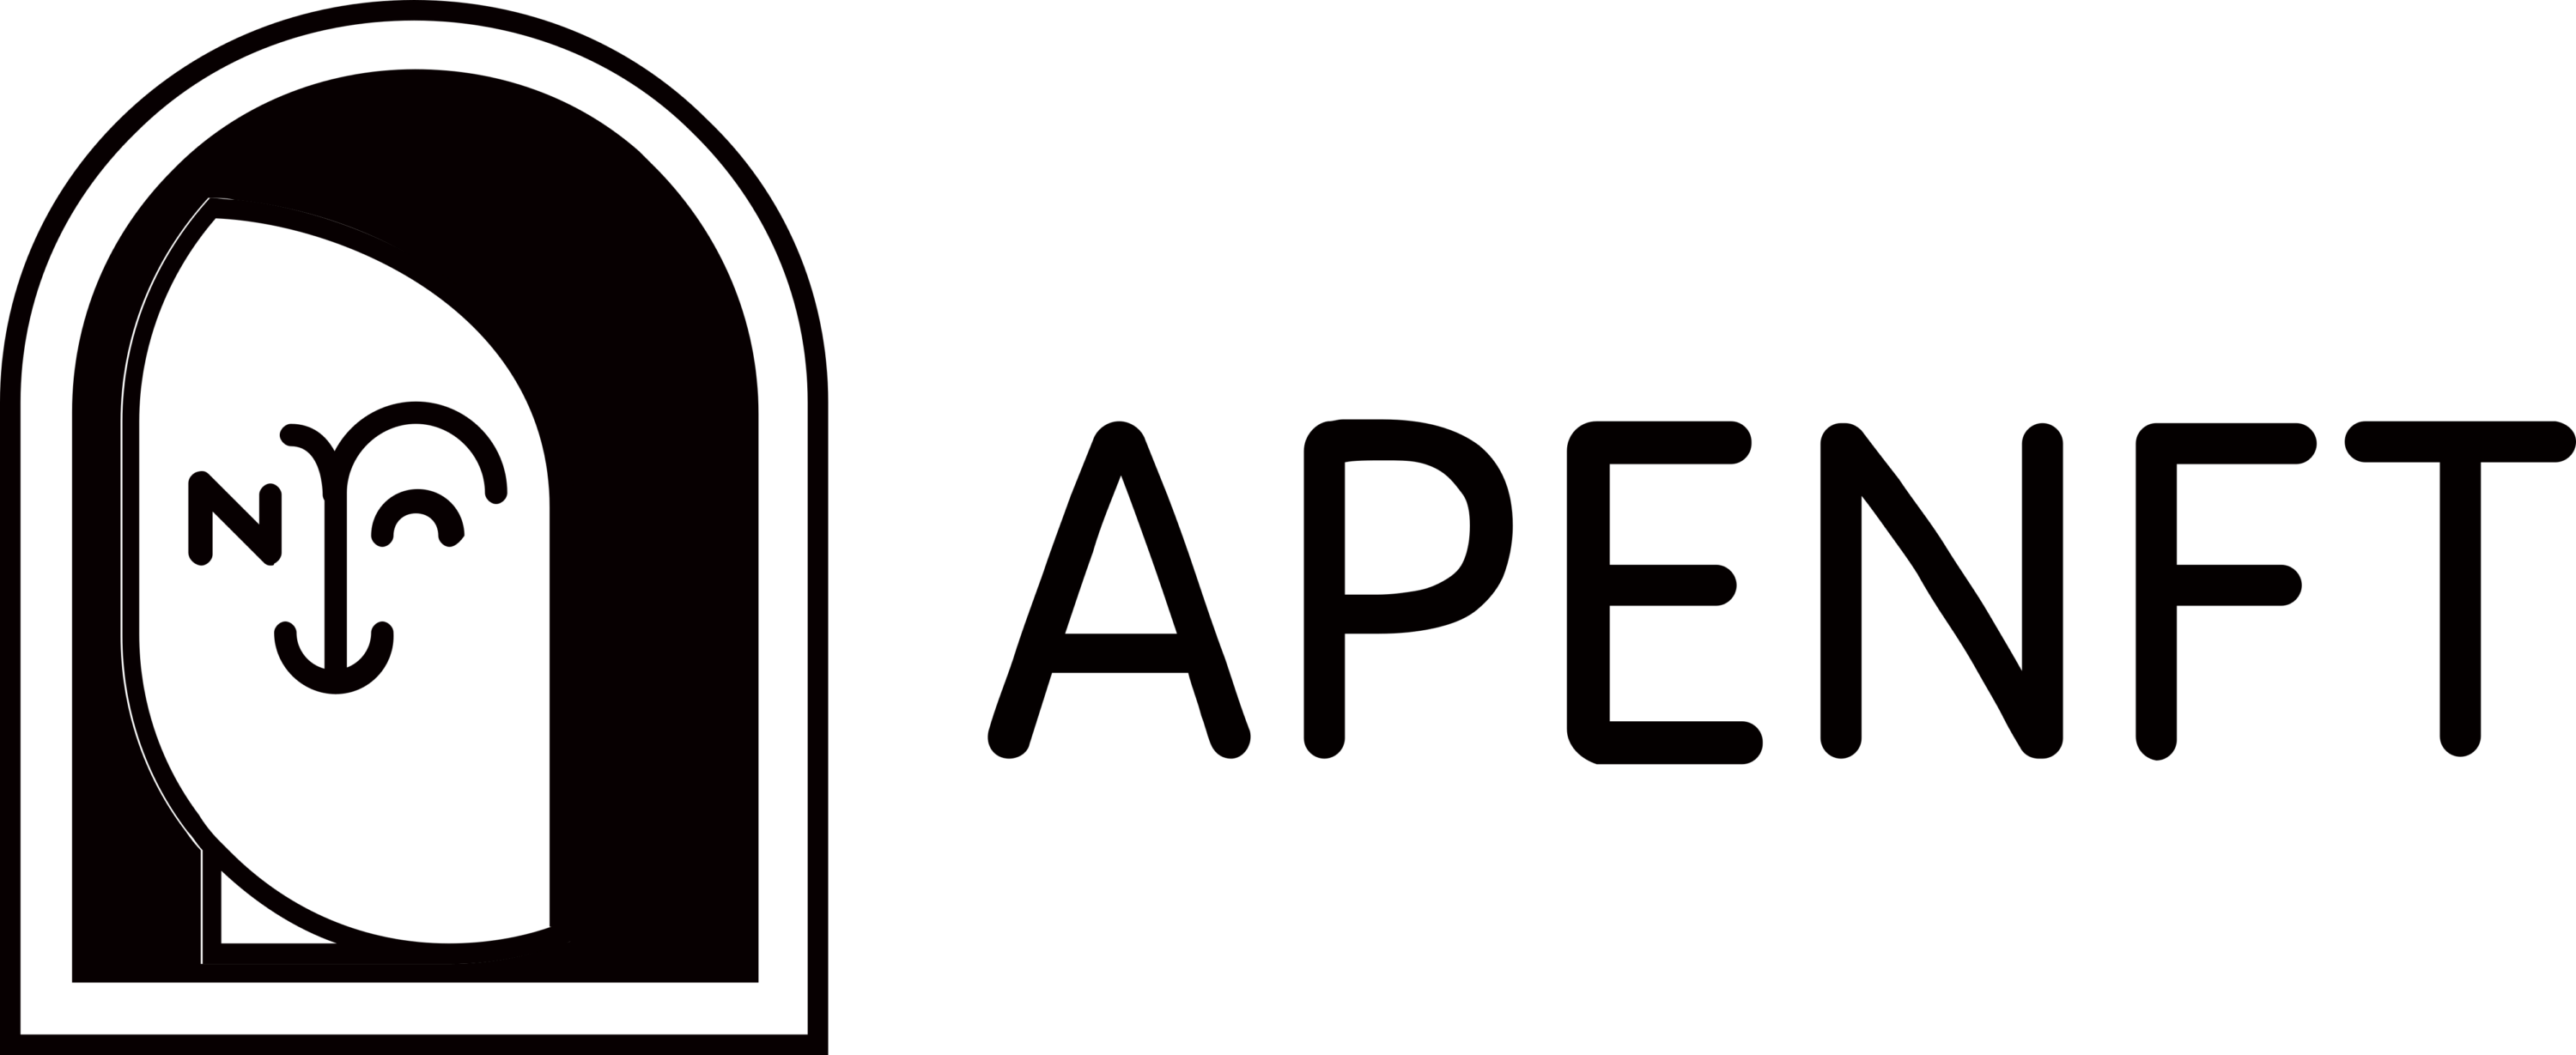 APENFT (NFT) Logo full